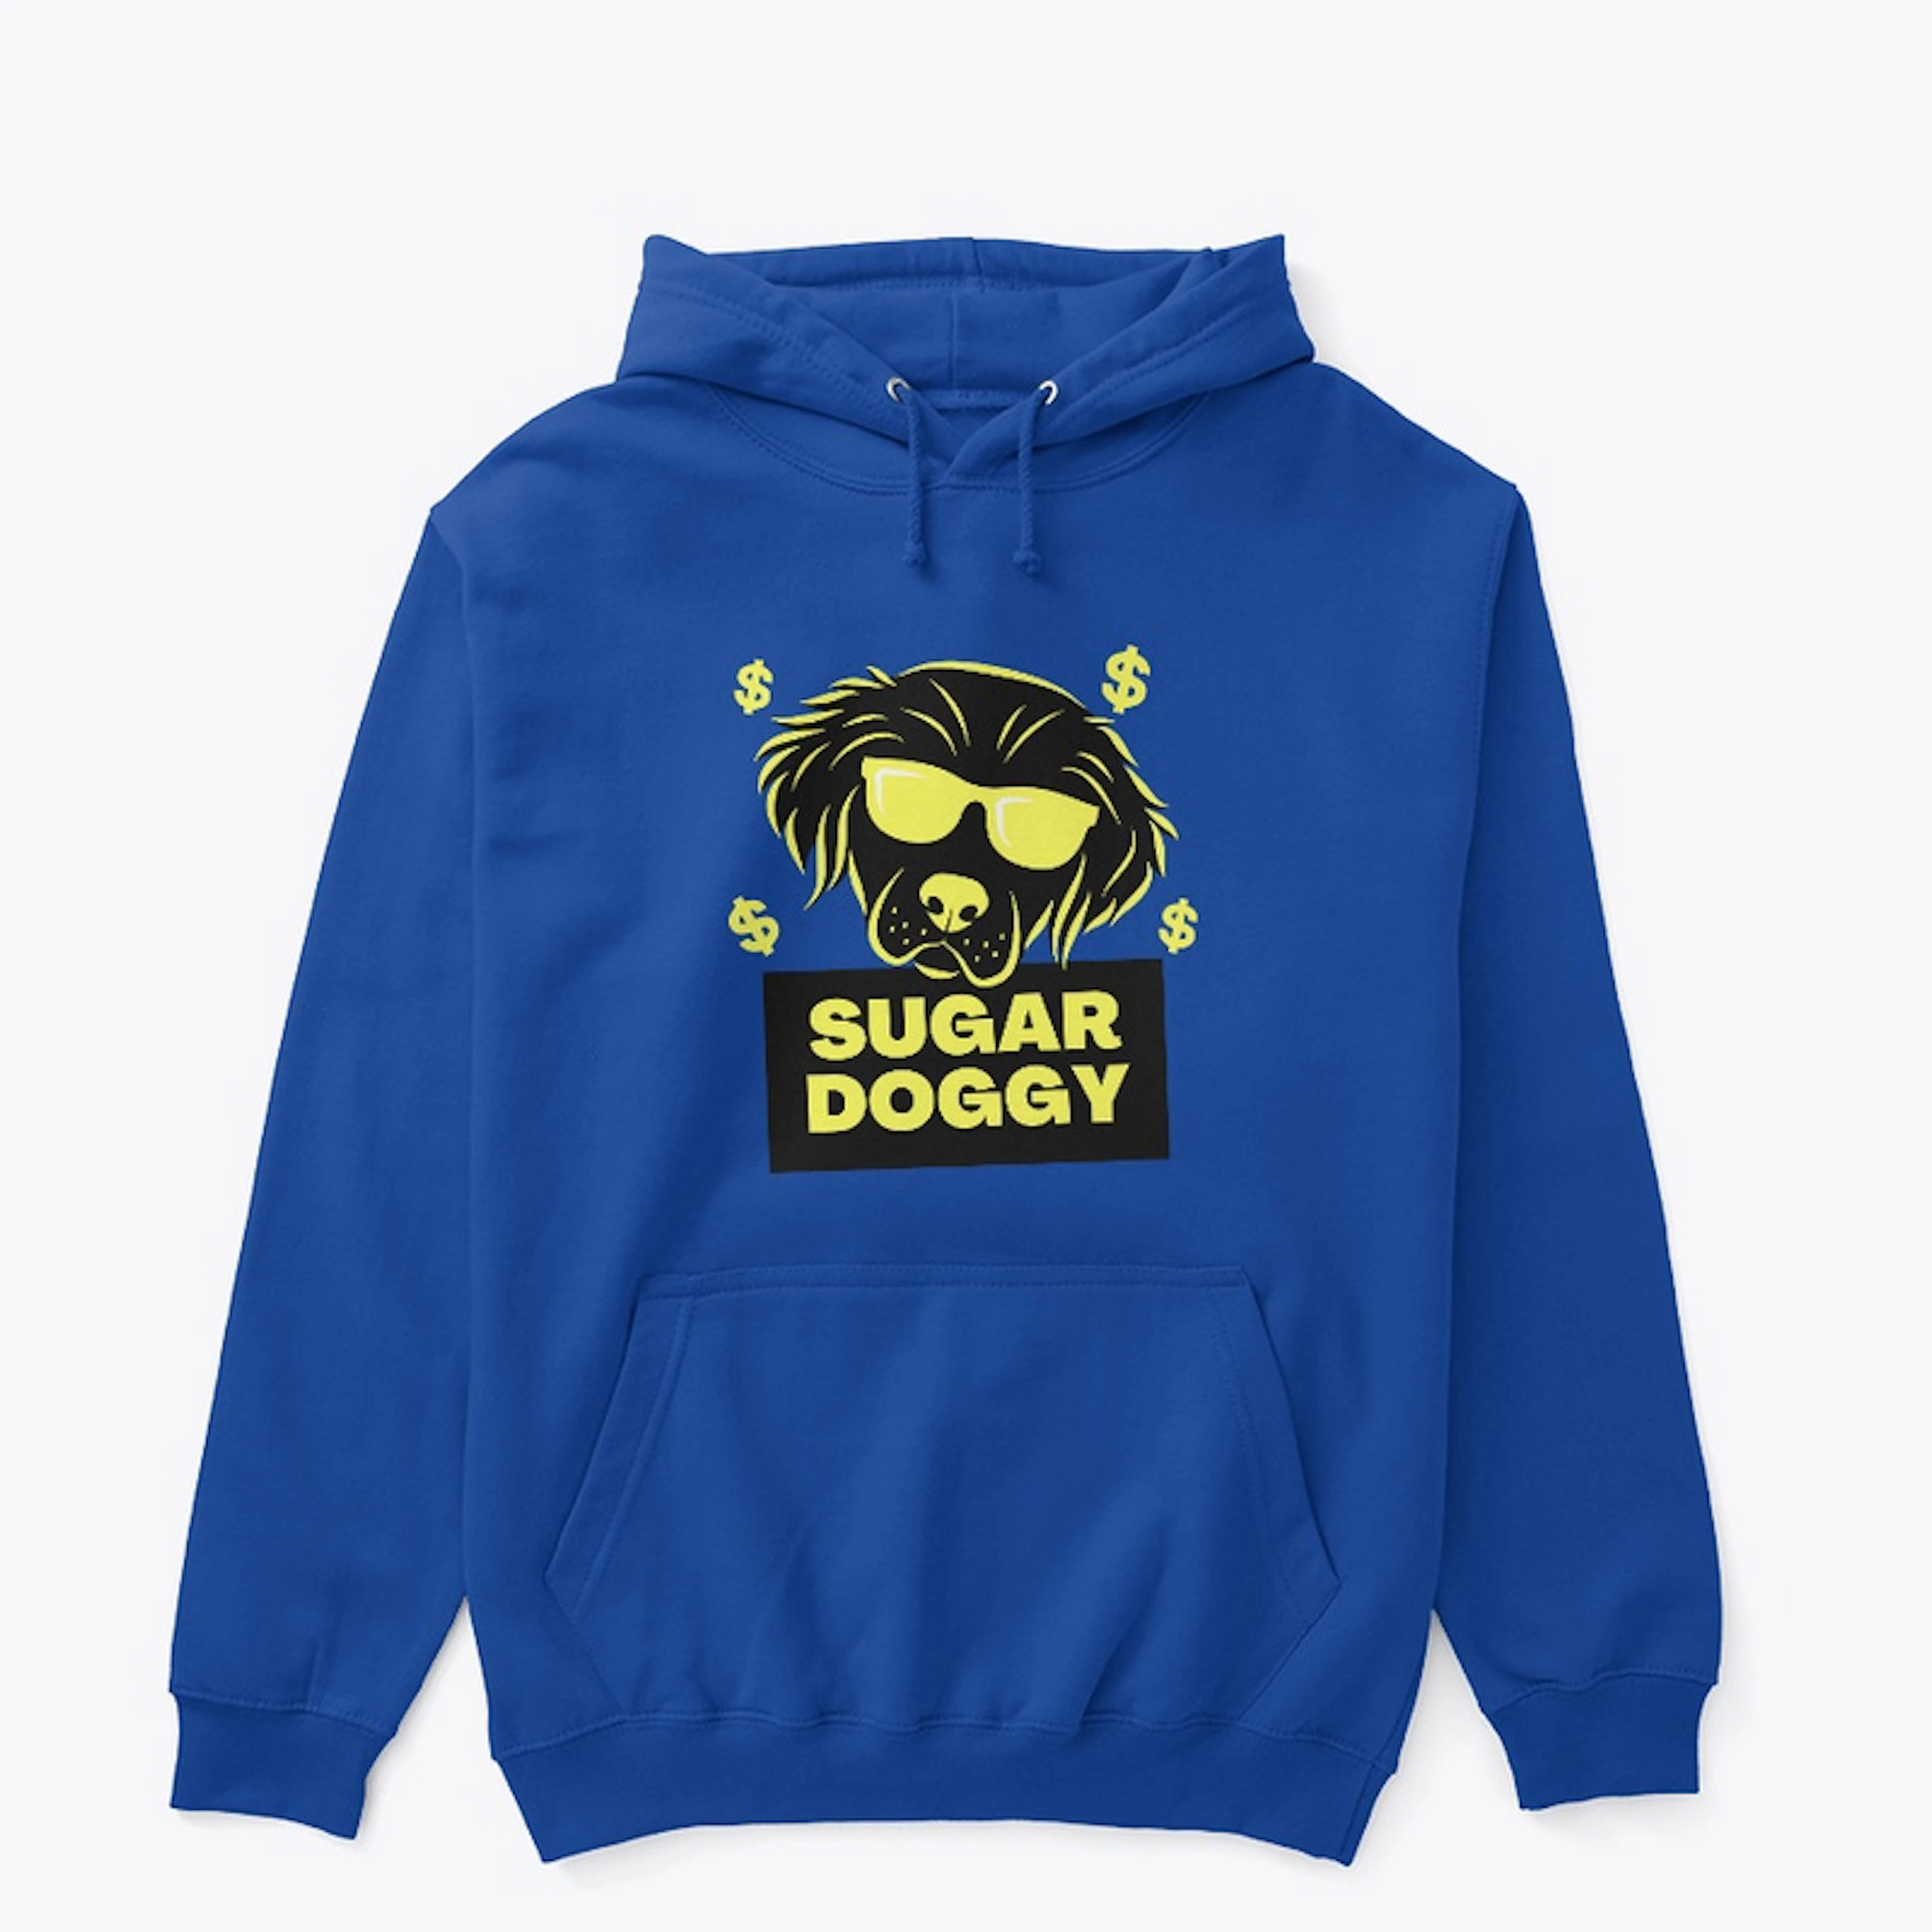 Sugar Doggy - The Swag Pup Tee